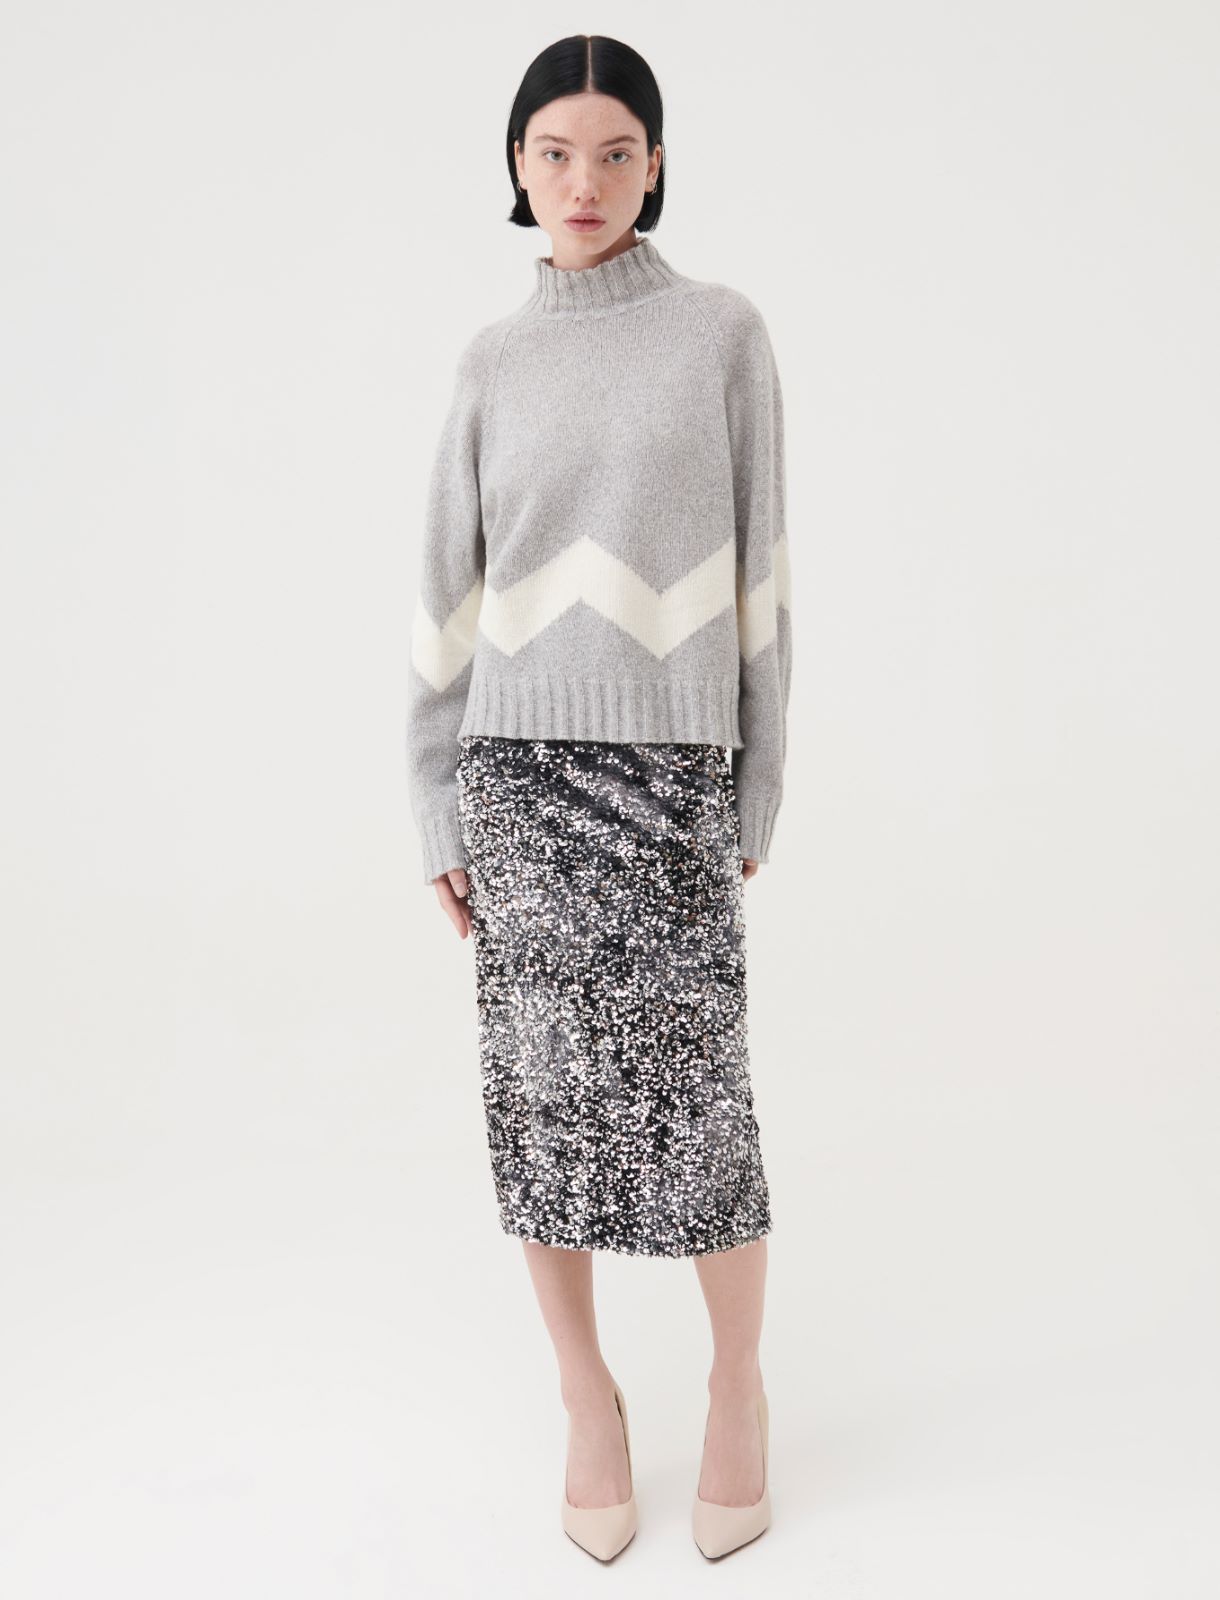 Inlay sweater - Melange light grey - Marella